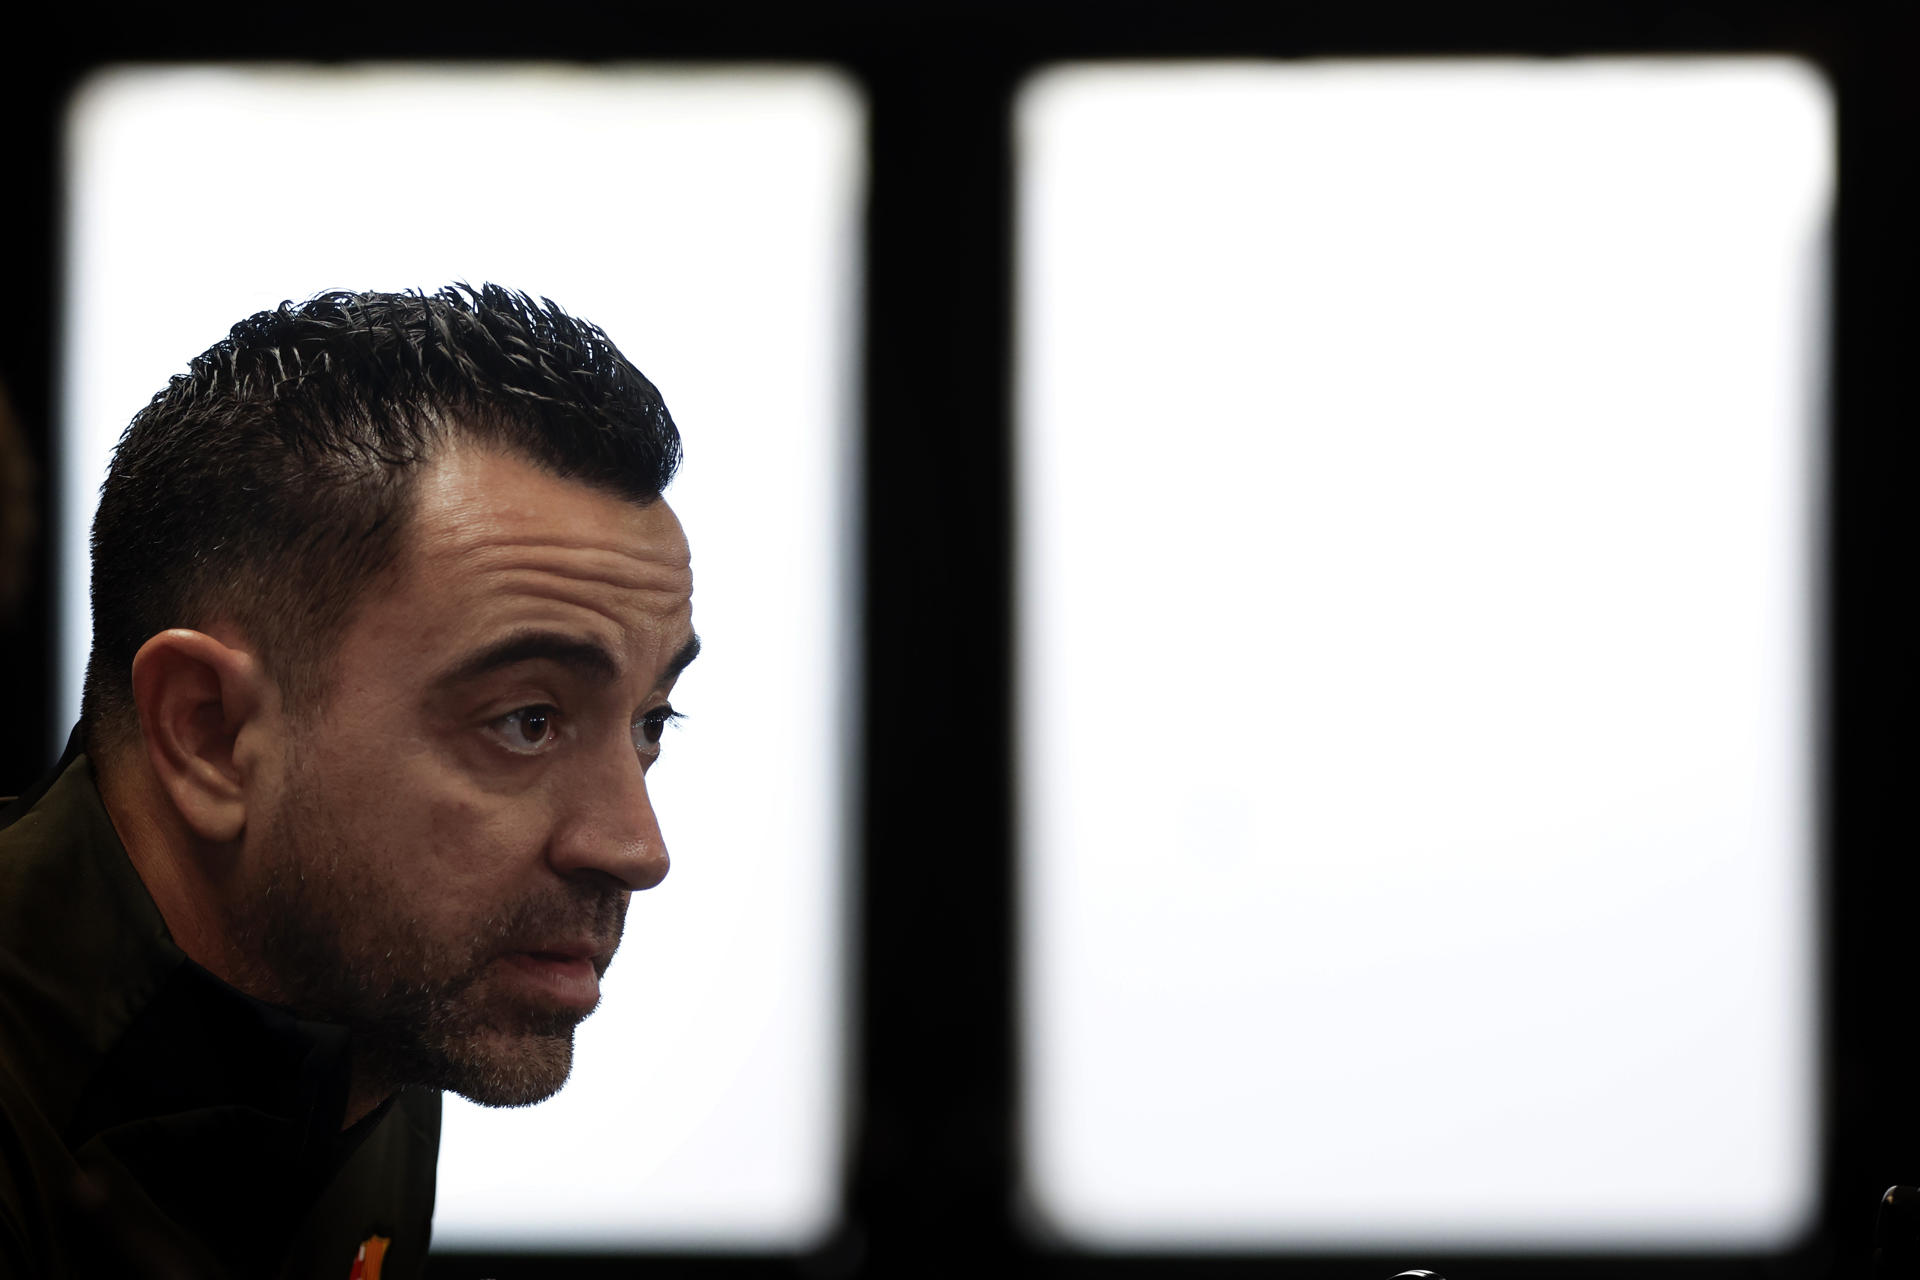 Press criticism affecting Barca players, says Xavi